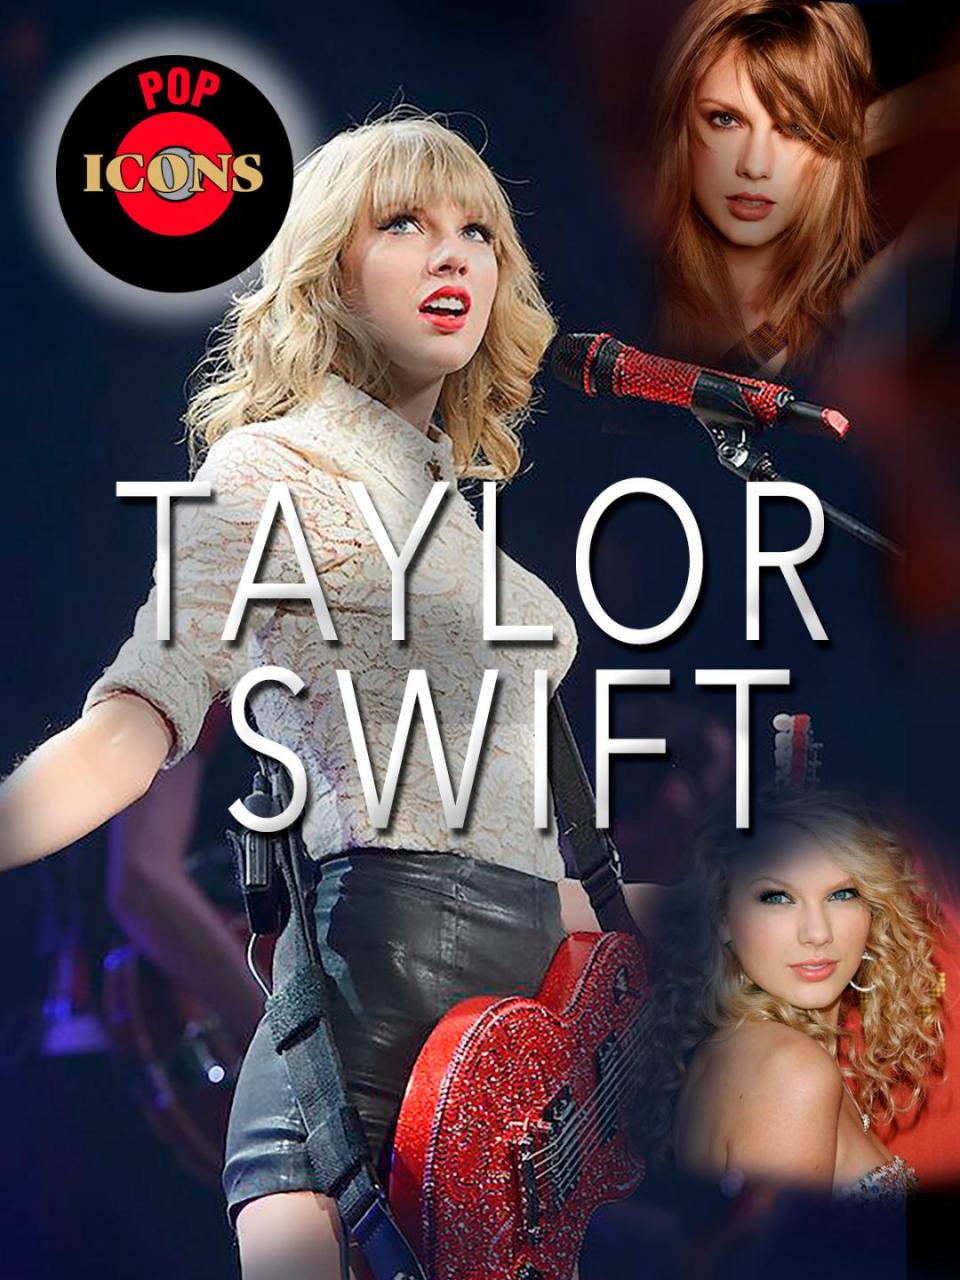 Pop Icons: Taylor Swift